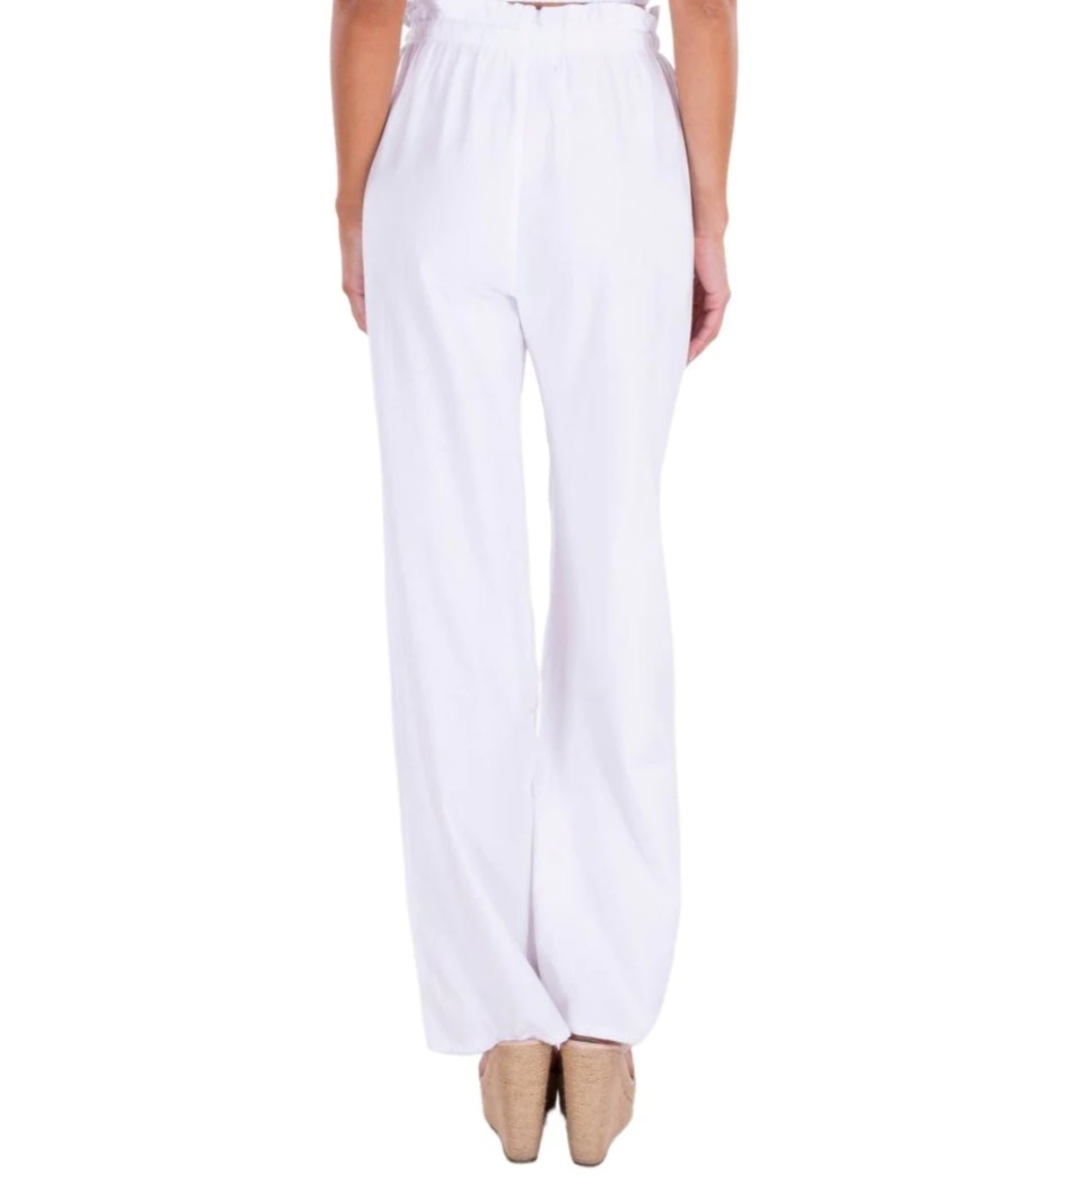 NW1446 - White Cotton Pants.